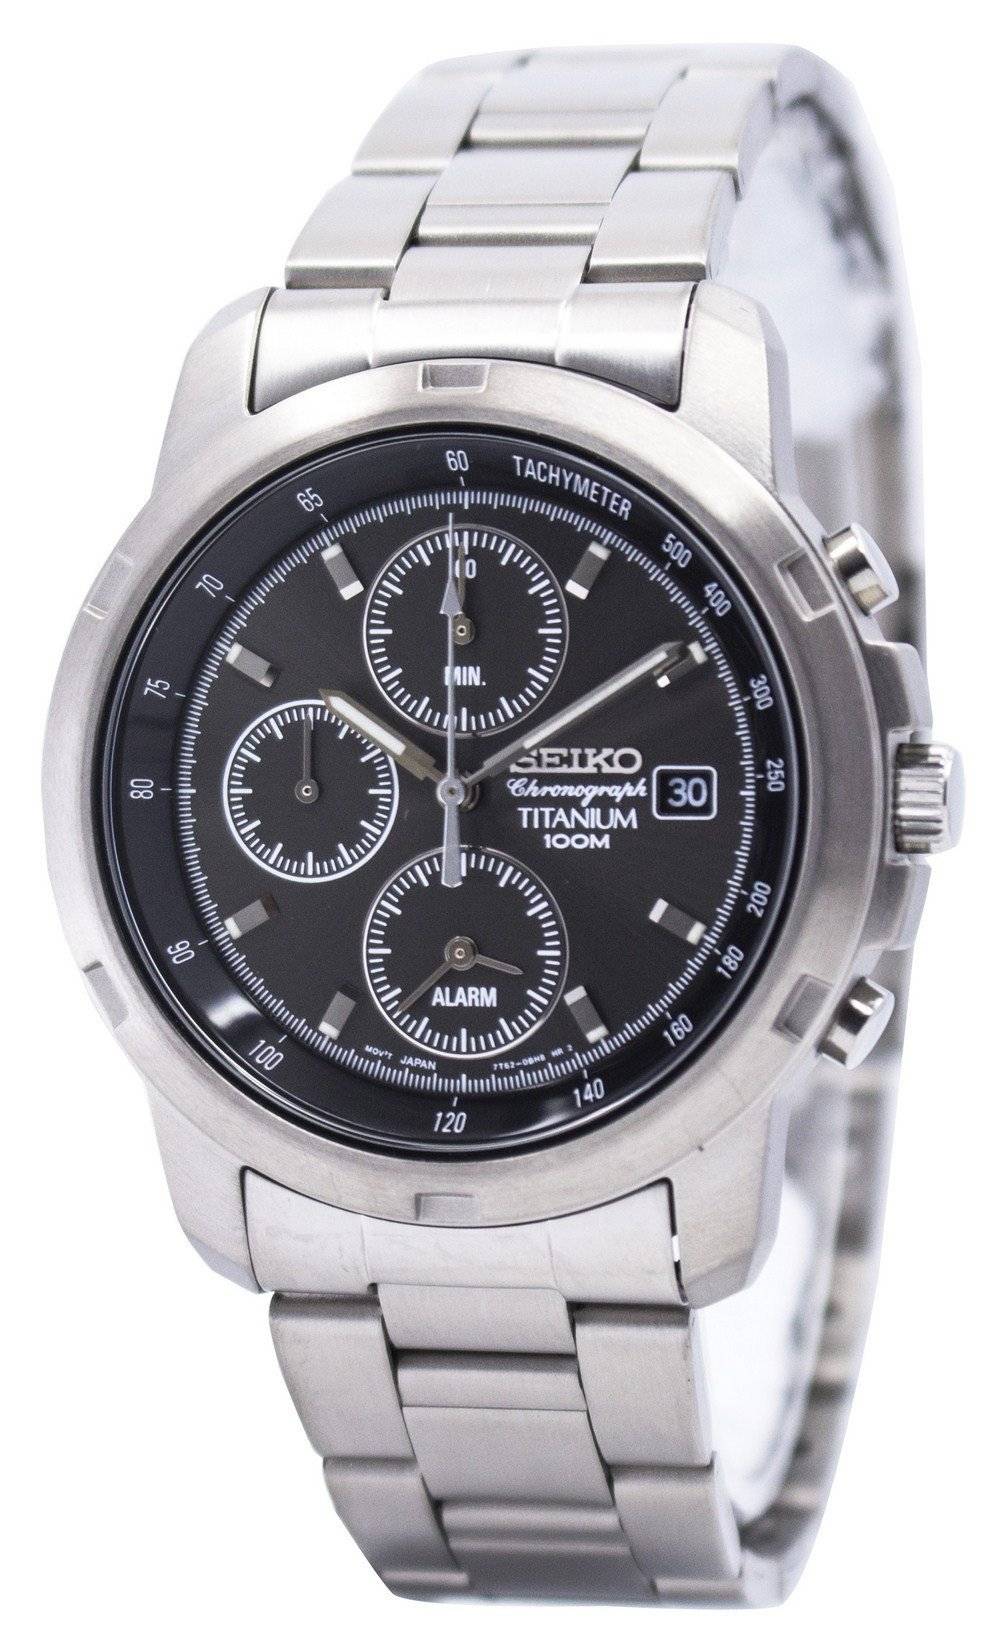 Seiko Titanium Alarm Chronograph SNA107 SNA107P1 SNA107P Men's Watch